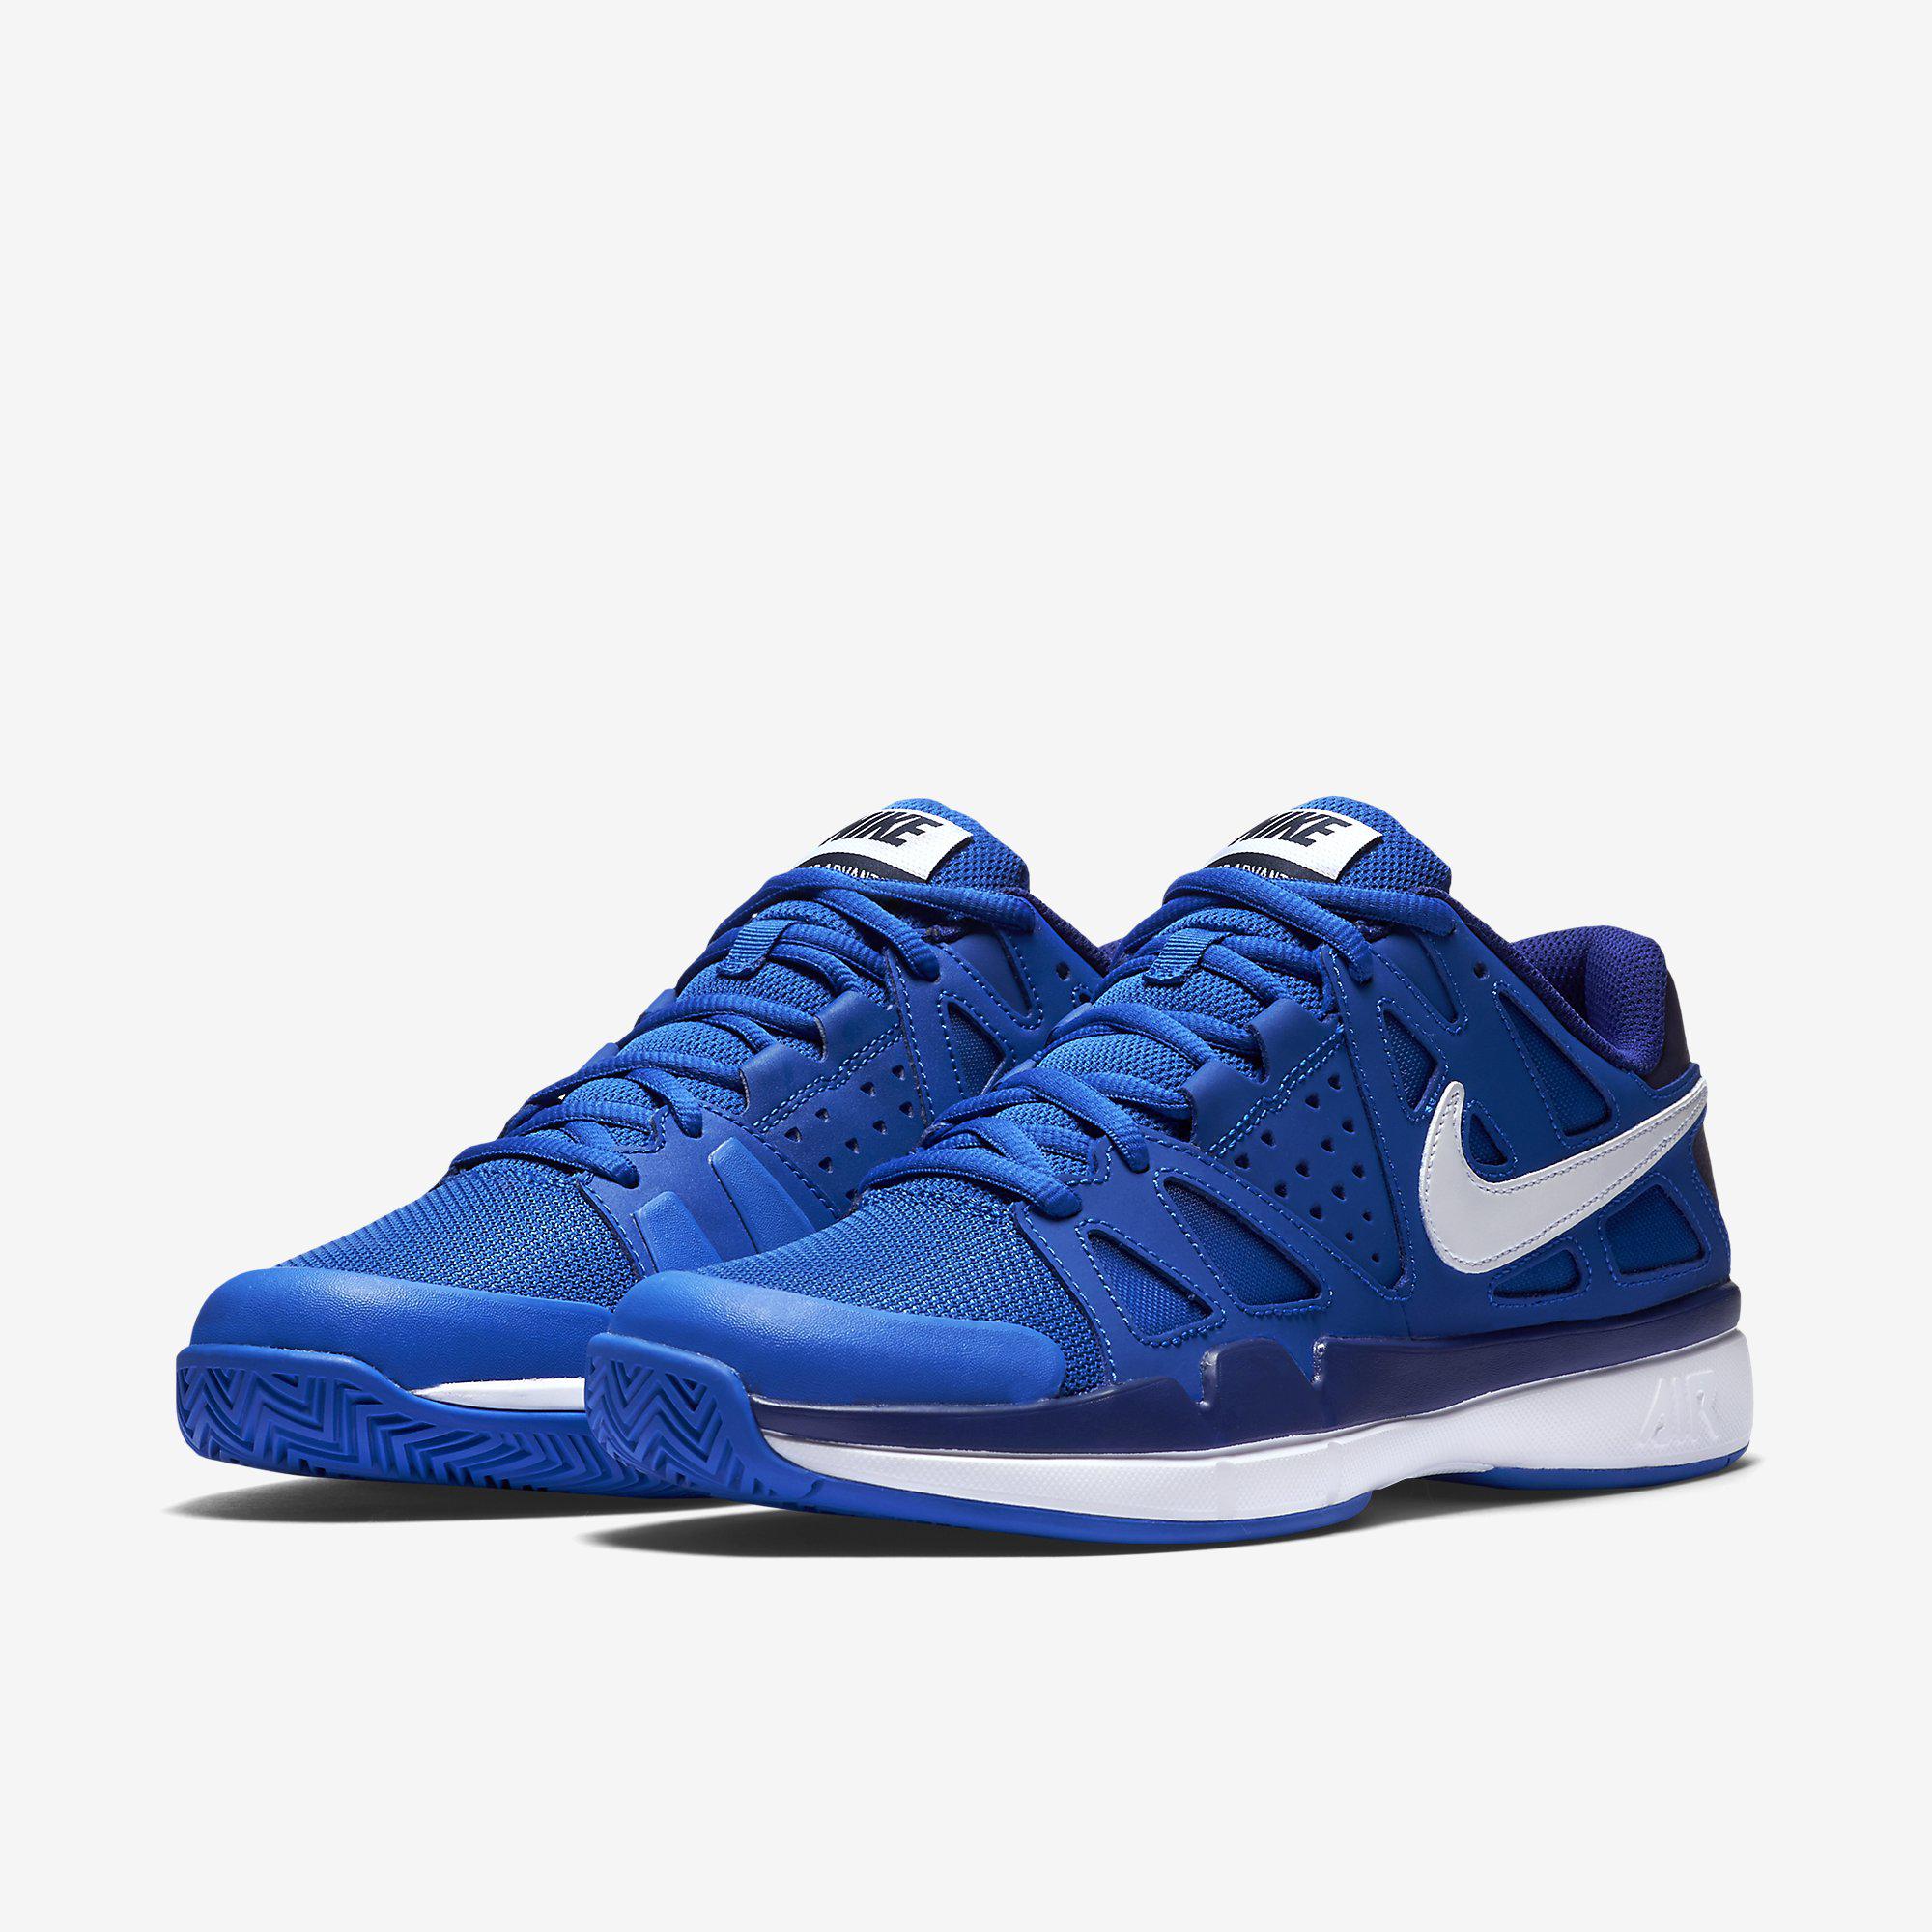 Nike Mens Air Vapor Advantage Tennis Shoes - Blue/White - Tennisnuts.com